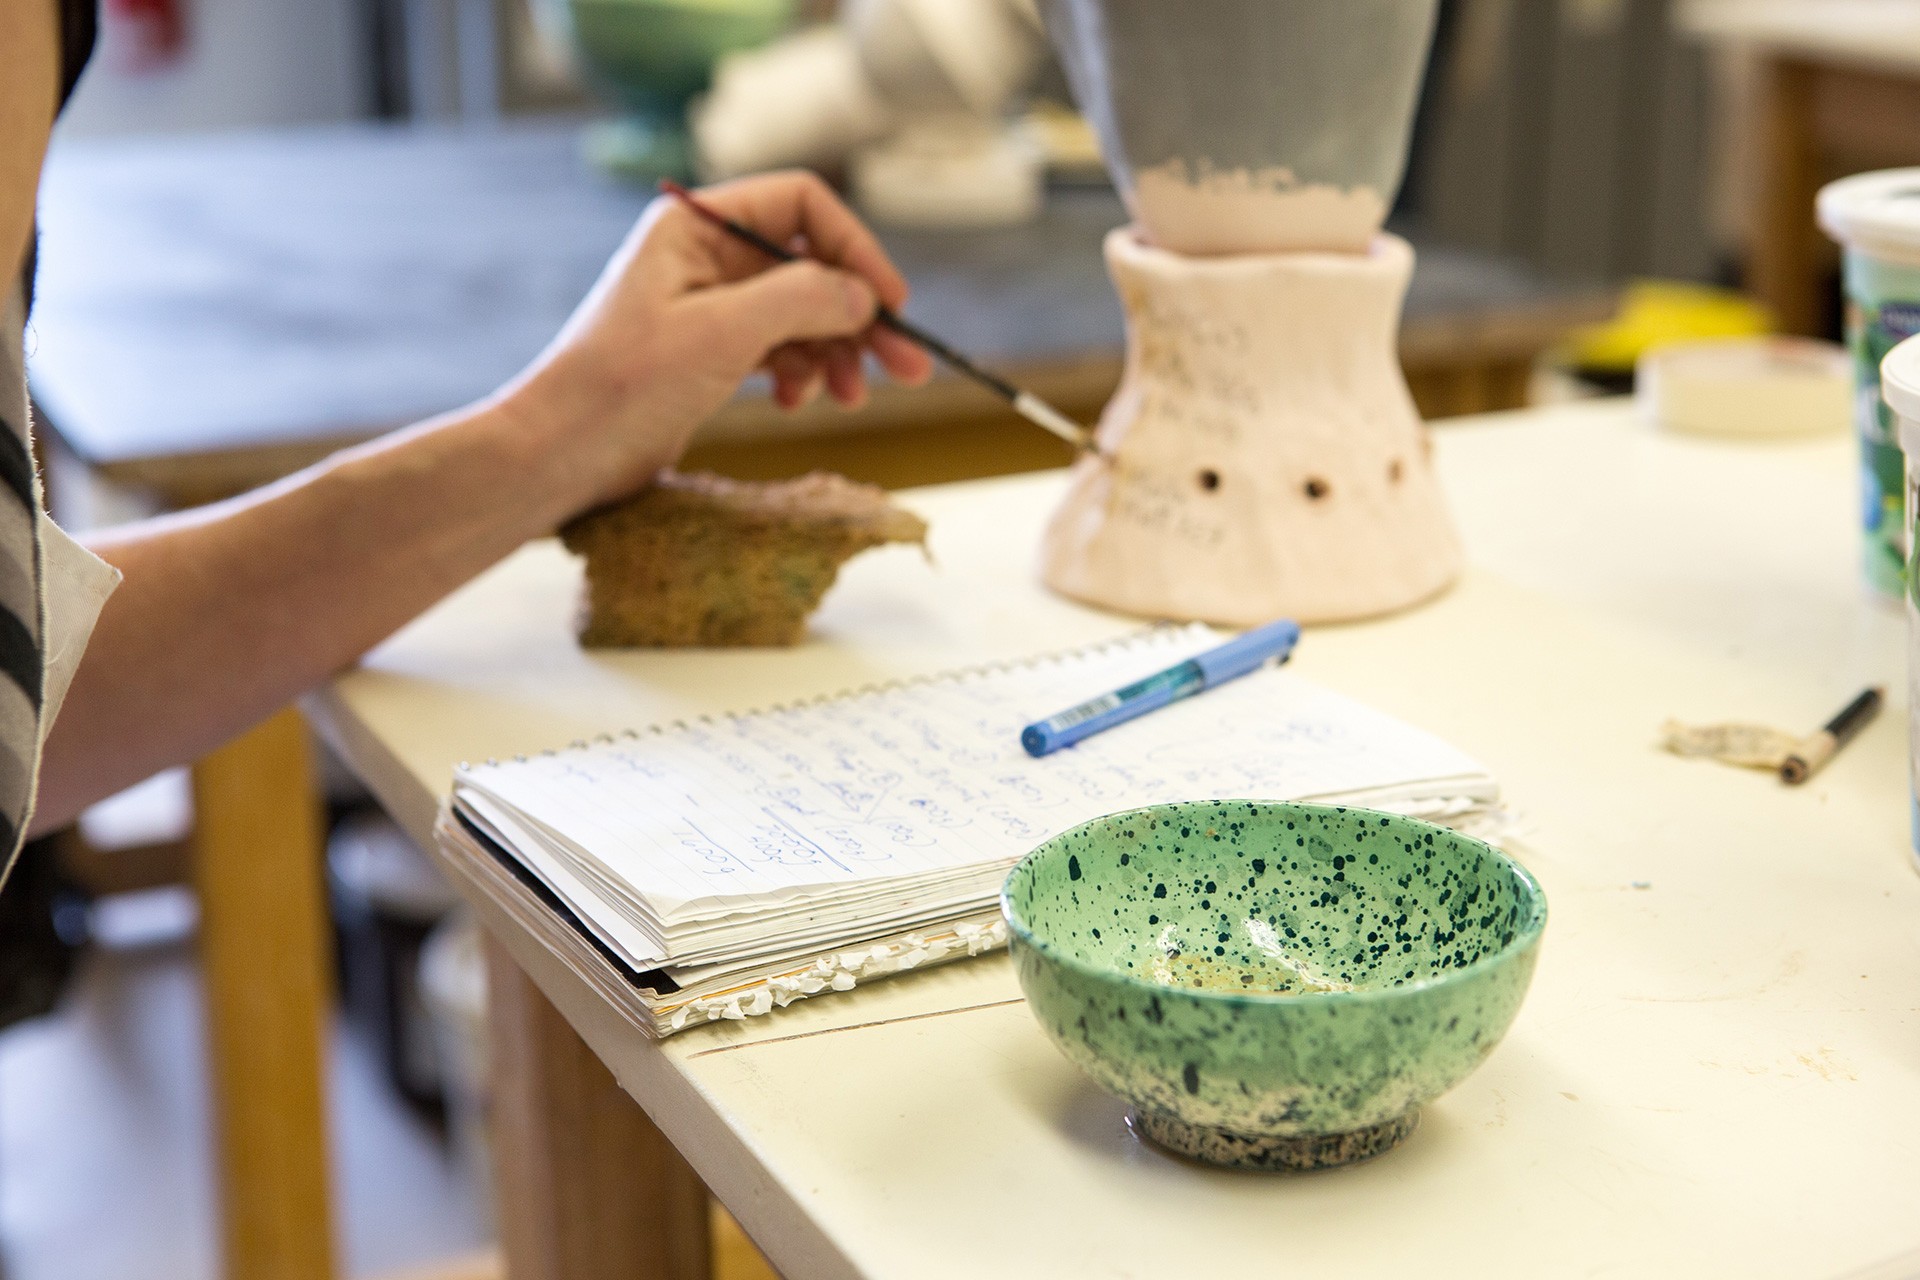 Ceramics Concentration